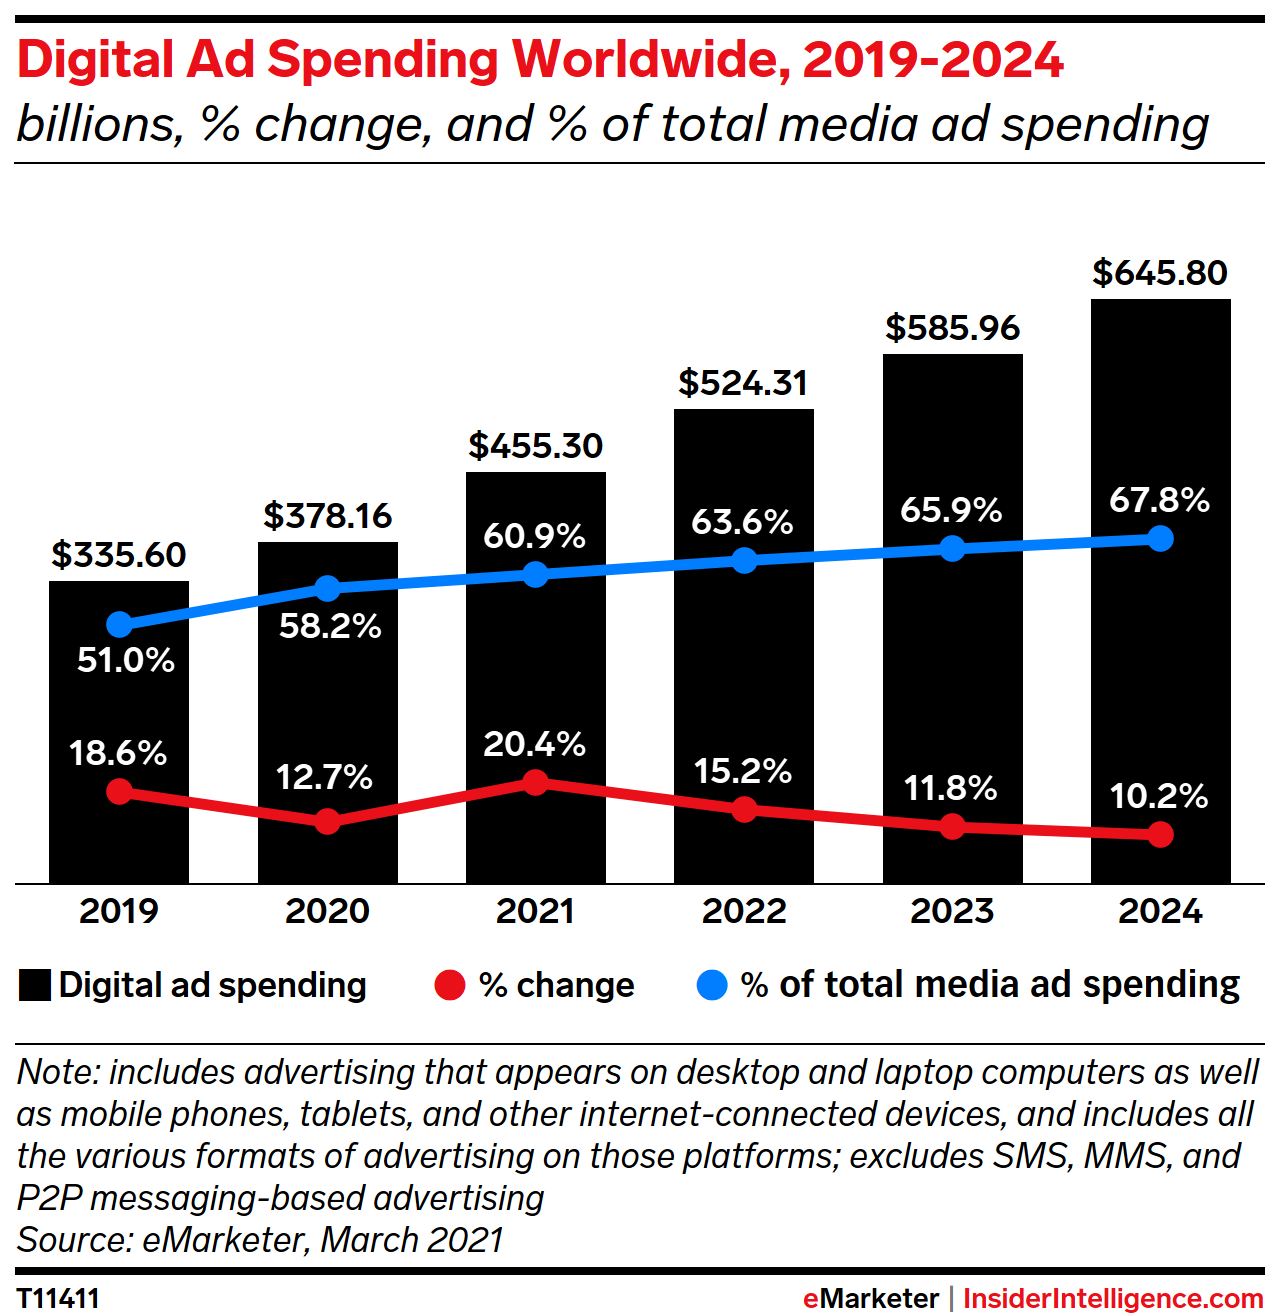 Digital ad spend worldwide